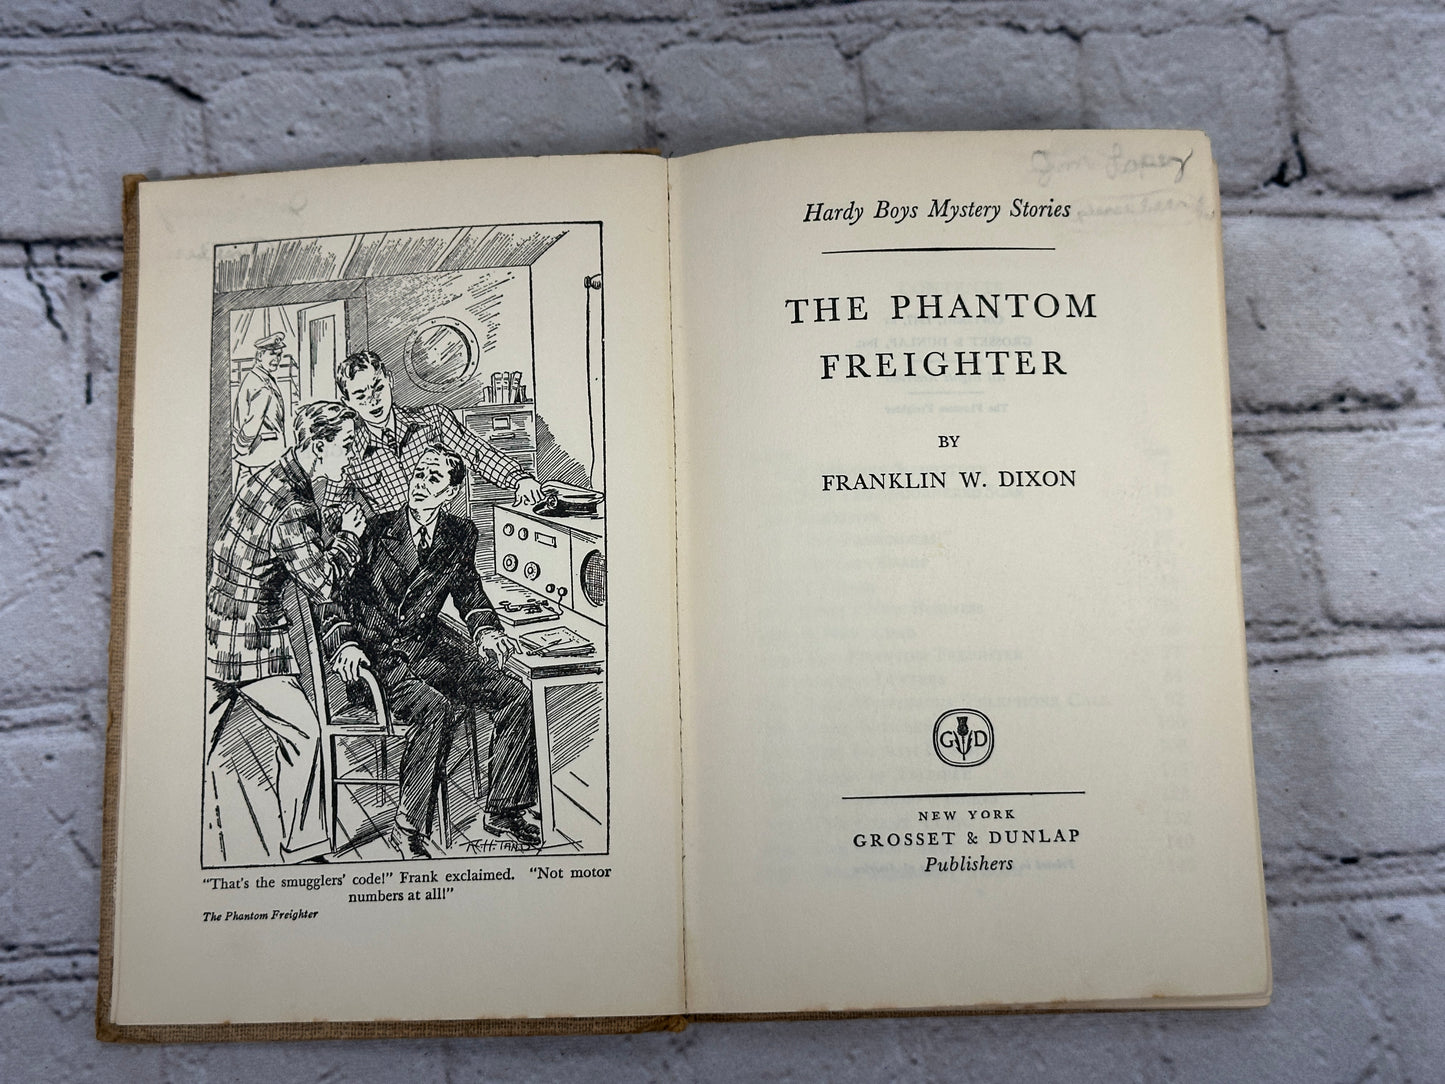 The Hardy Boys: The Phantom Freighter #26 by Franklin W. Dixon